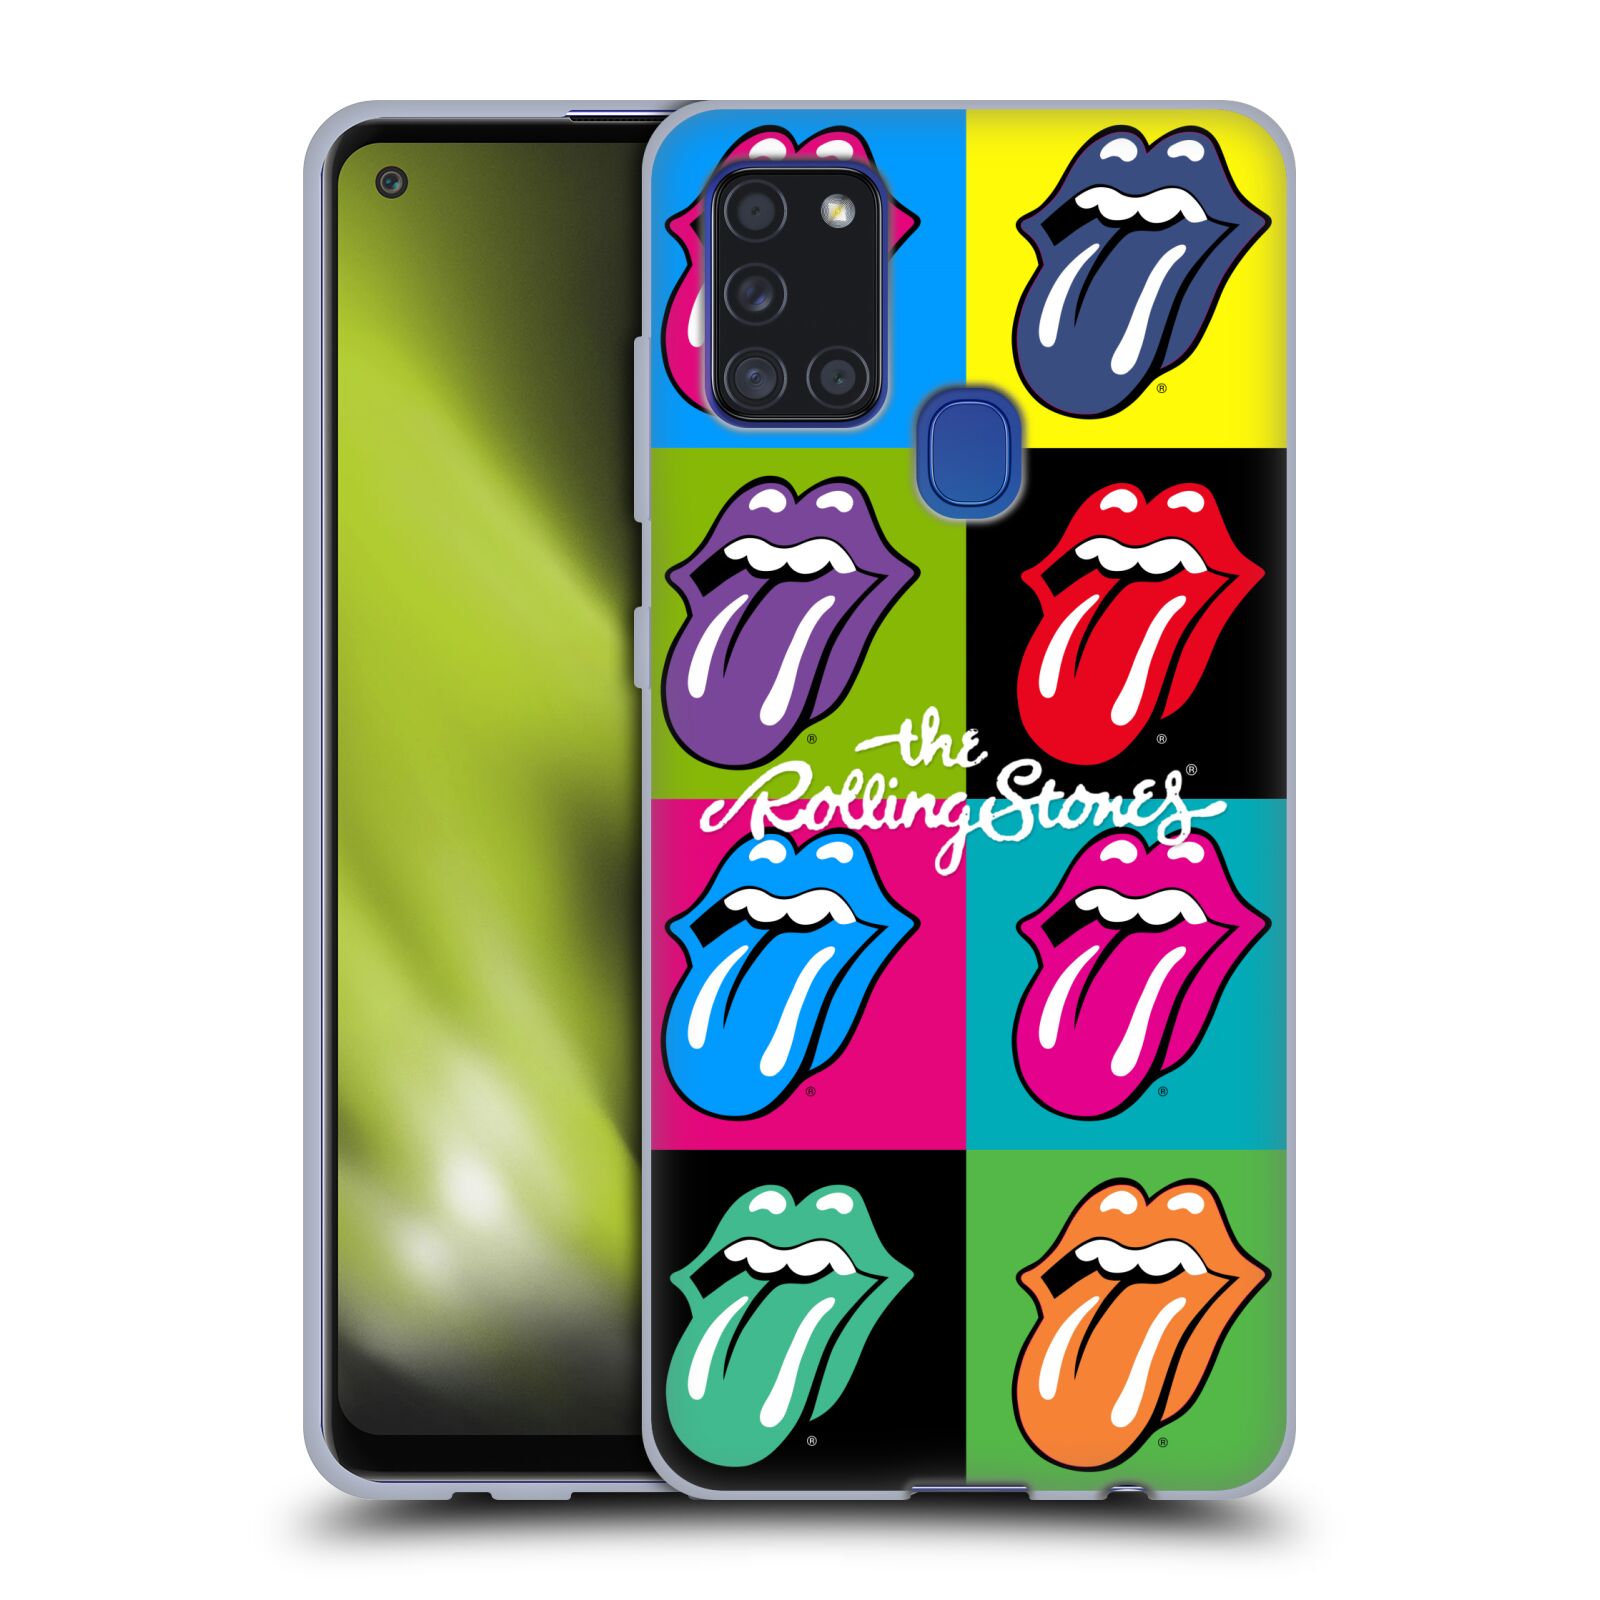 Silikonové pouzdro na mobil Samsung Galaxy A21s - Head Case - The Rolling Stones - Pop Art Vyplazené Jazyky (Silikonový kryt, obal, pouzdro na mobilní telefon Samsung Galaxy A21s SM-A217F s motivem The Rolling Stones - Pop Art Vyplazené Jazyky)